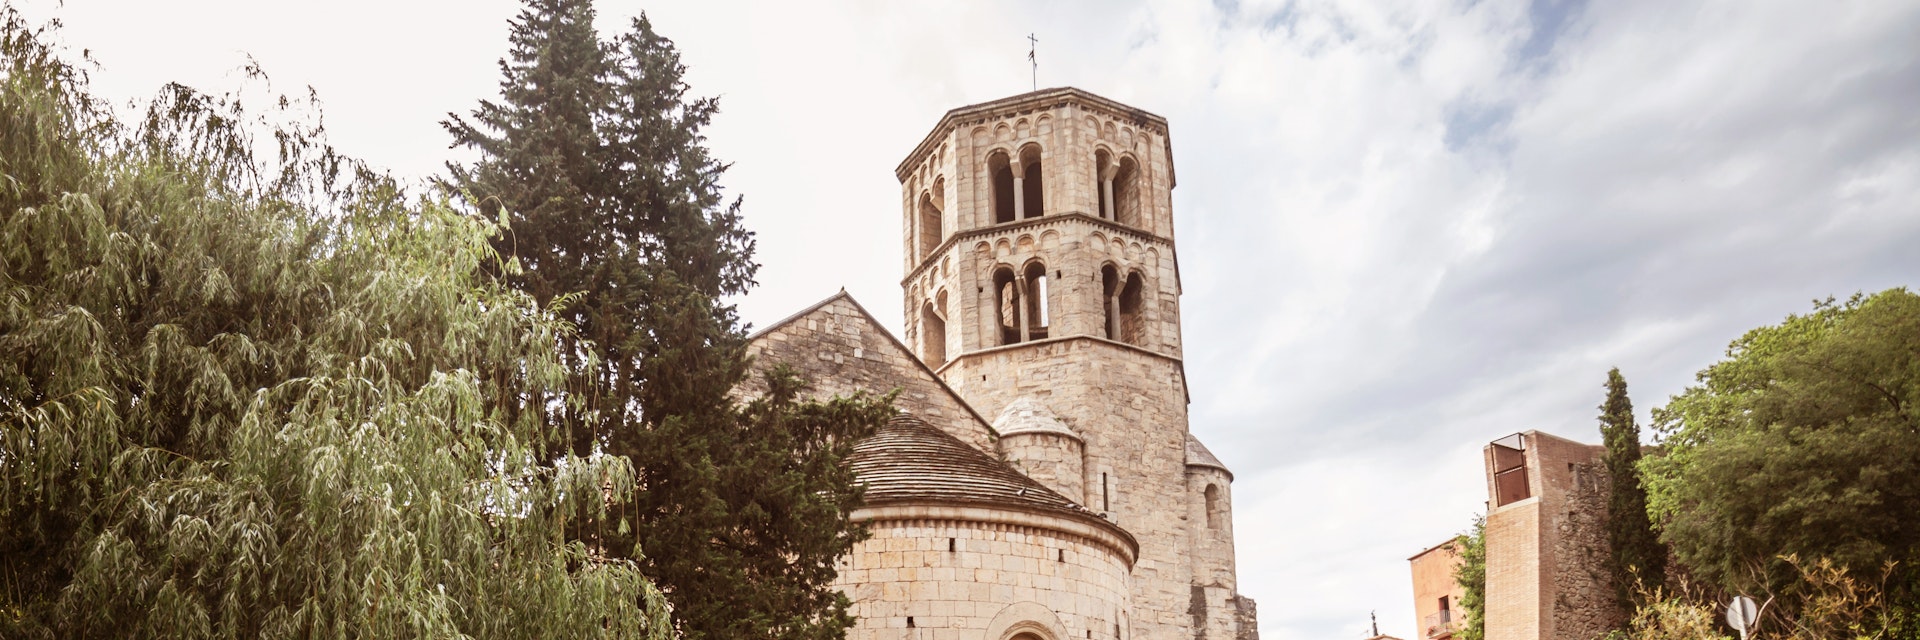 Monastery, romanesque style, Monestir Sant Pere de Galligants, Girona, Catalonia, Spain.